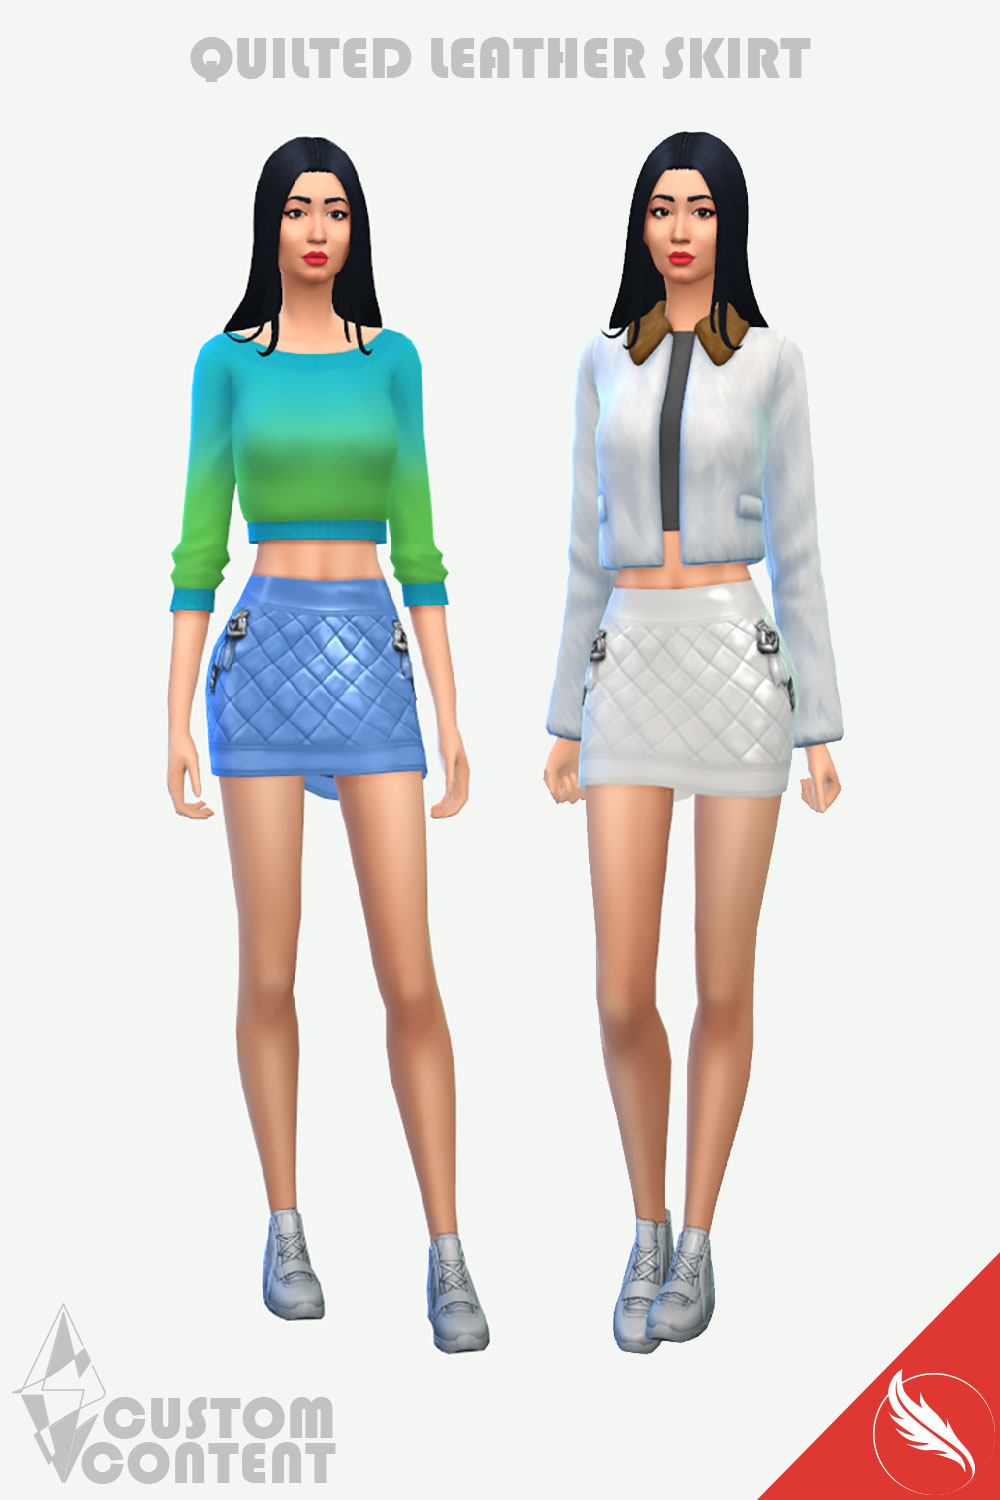 The Sims 4 Skirt